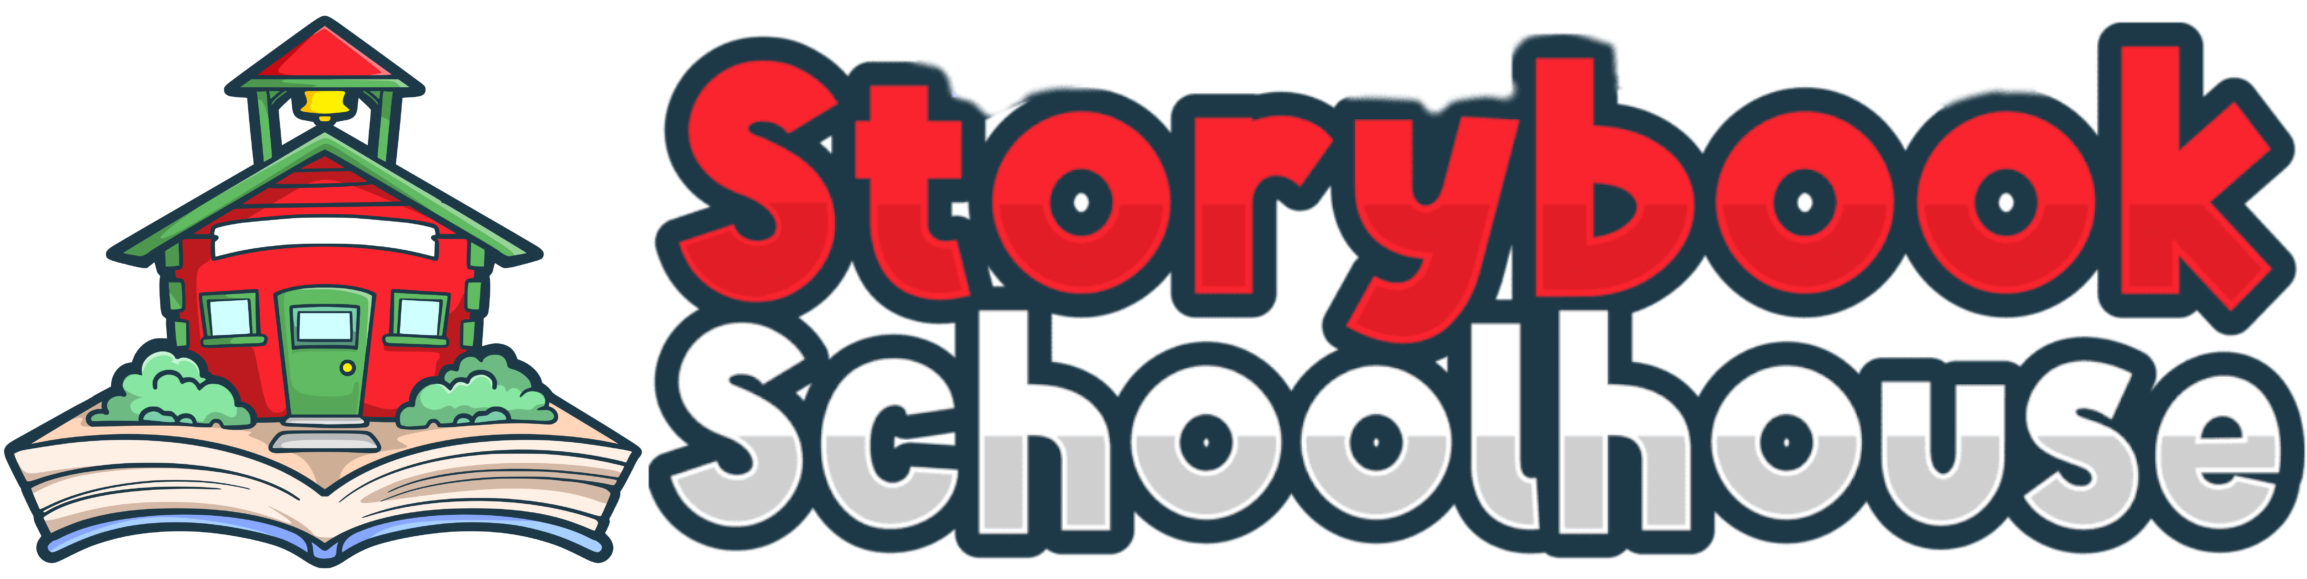 Storybook Schoolhouse Preschool Daycare